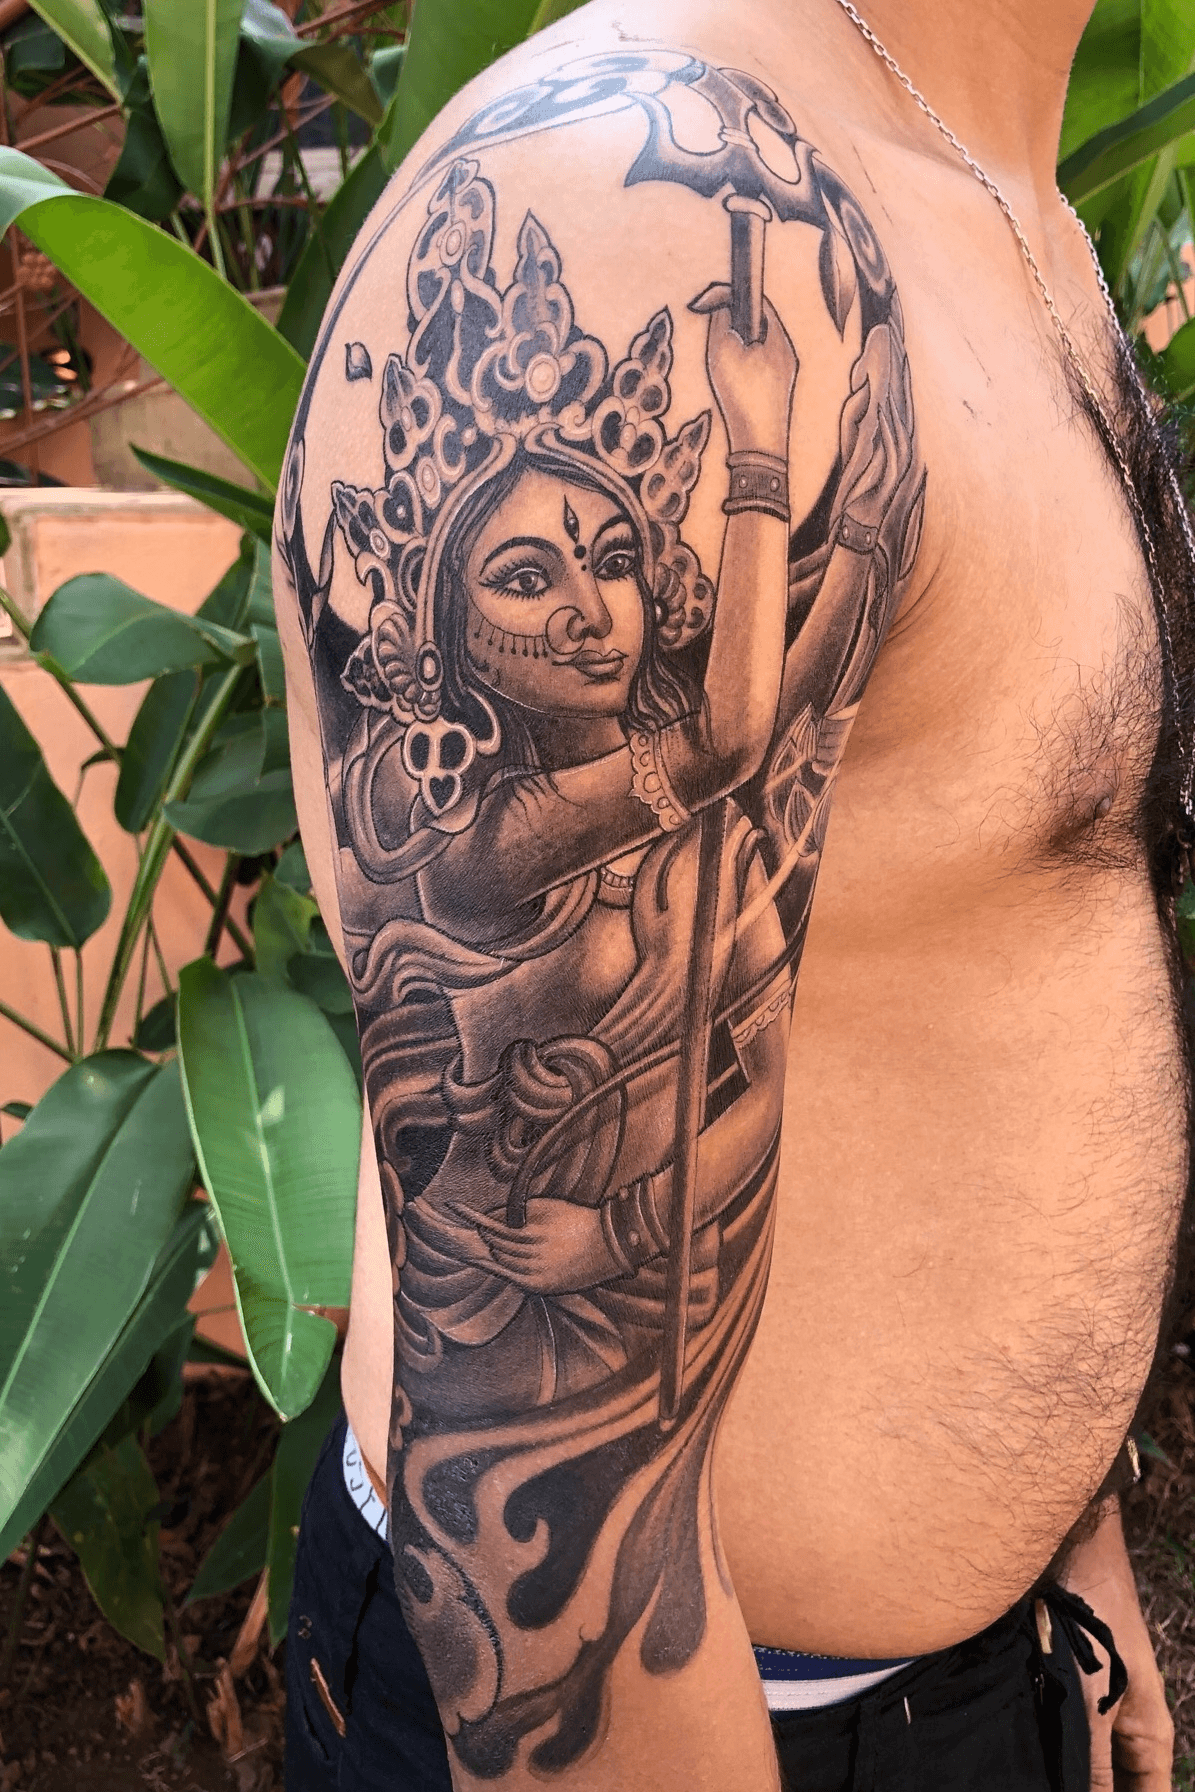 Aatman Tattoos Bangalore  Durga Maa tattoo was done by Aatman tattoos  Bangalore For appointment and consultation call is  8277199422  Facebook